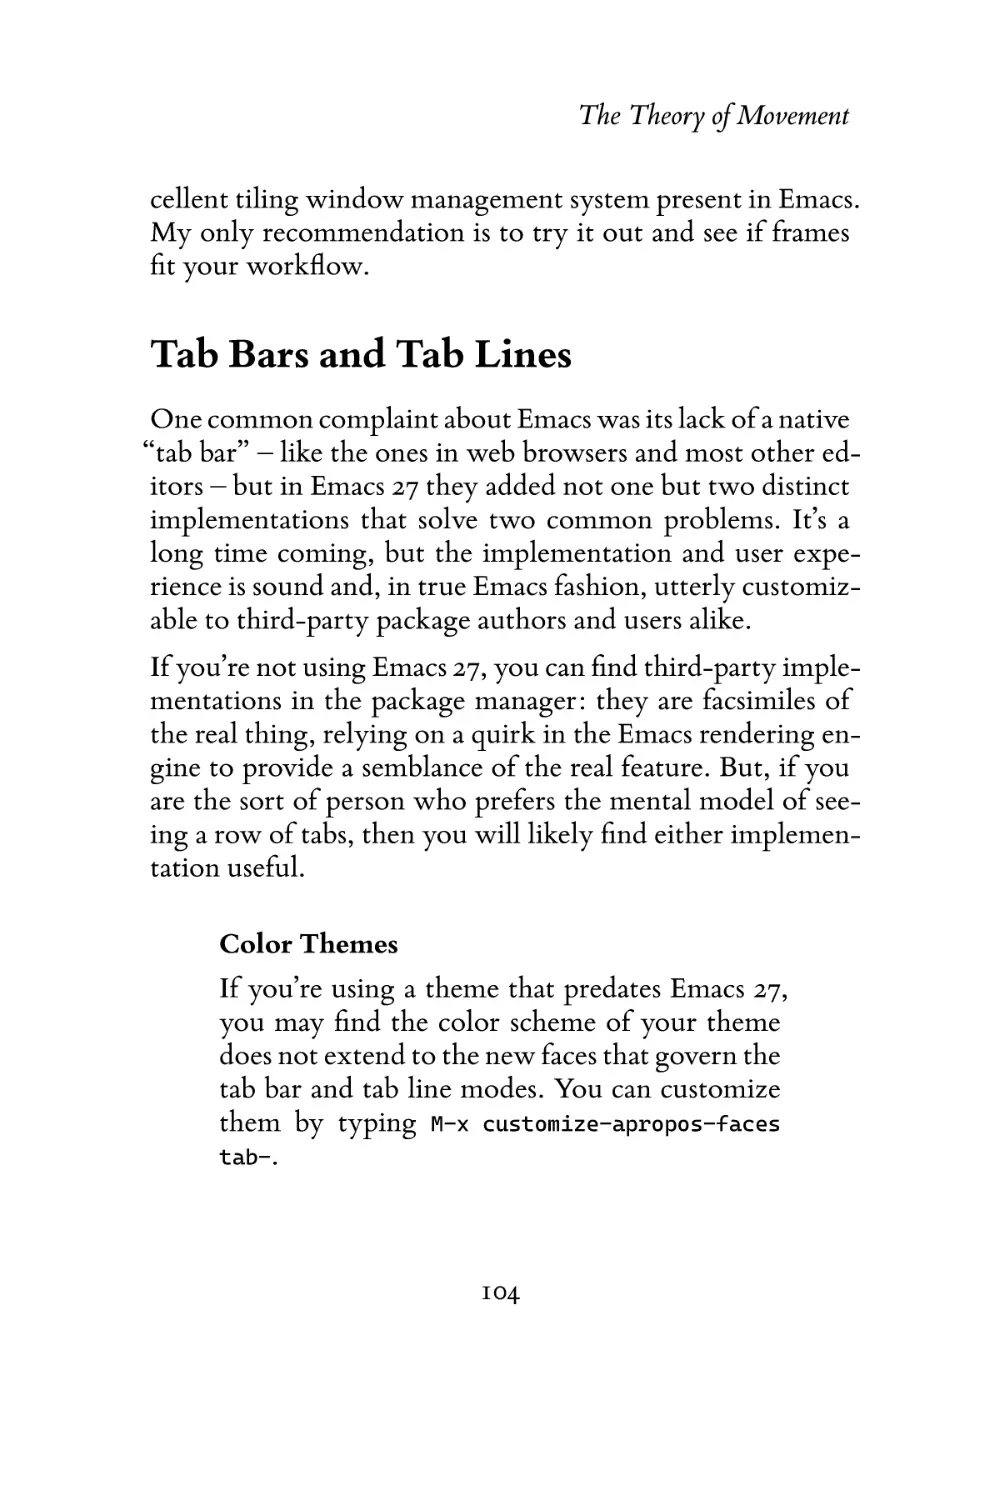 Tab Bars and Tab Lines